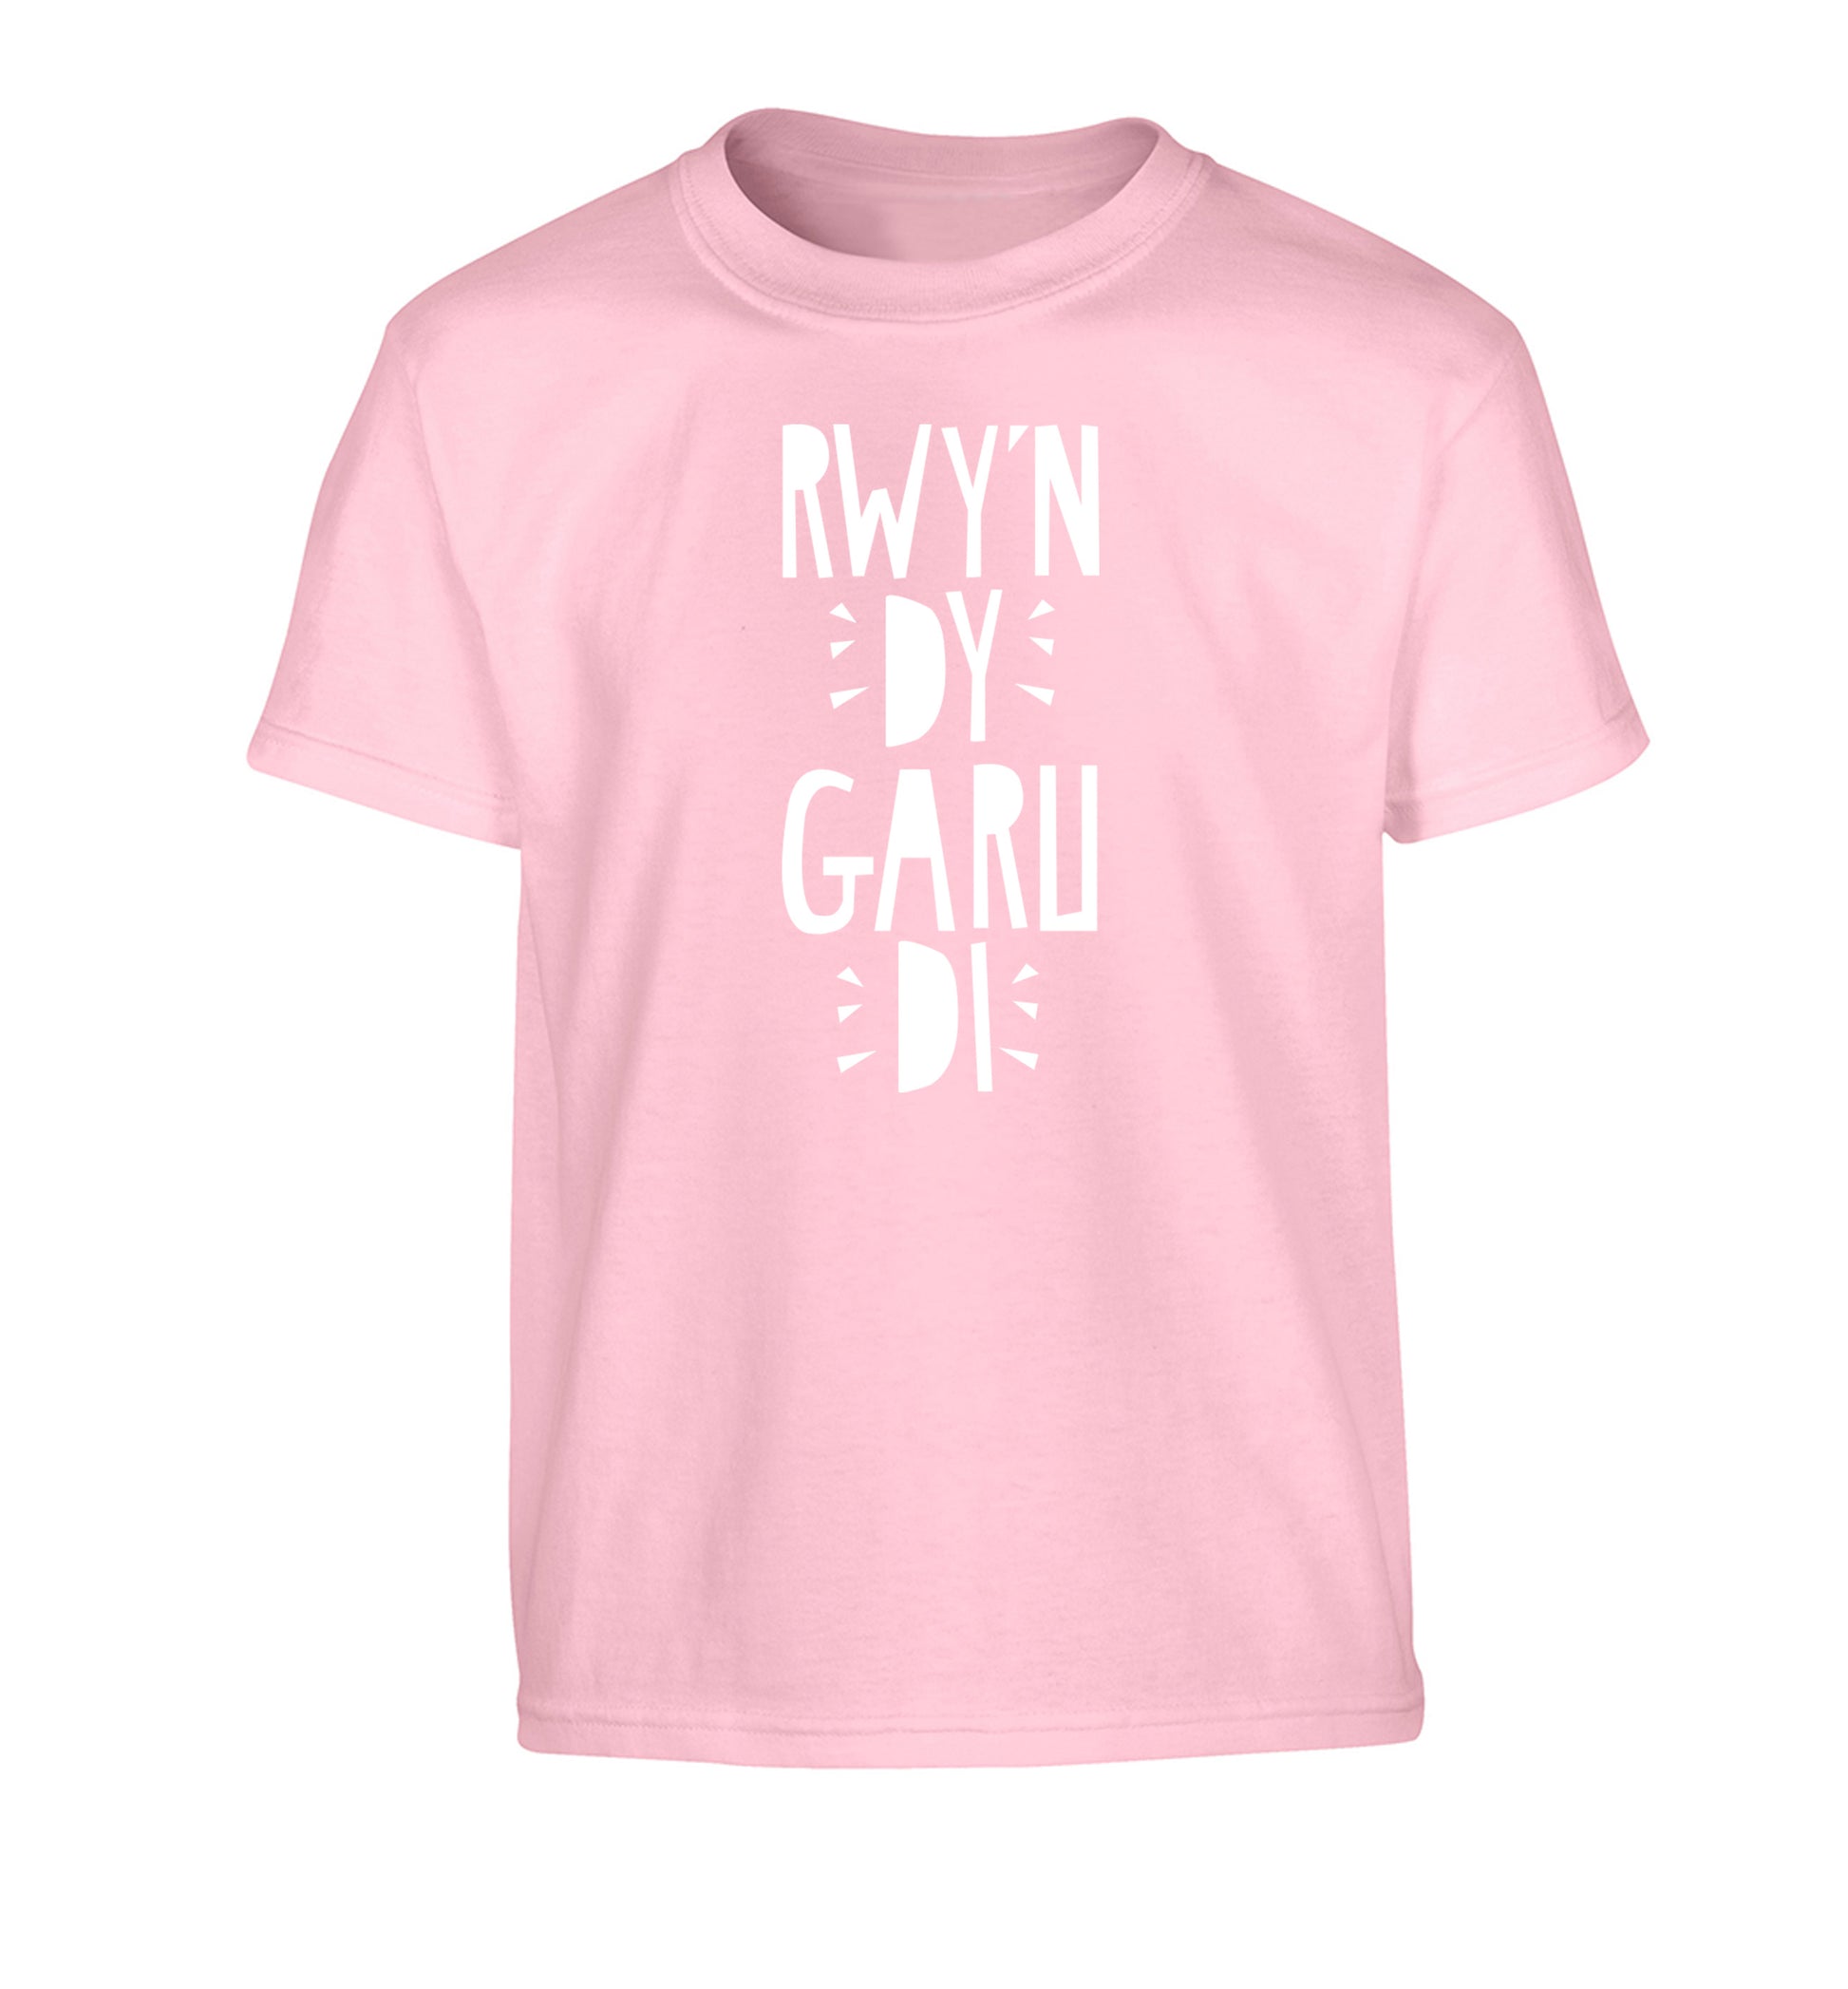 Rwy'n dy garu di - I love you Children's light pink Tshirt 12-13 Years